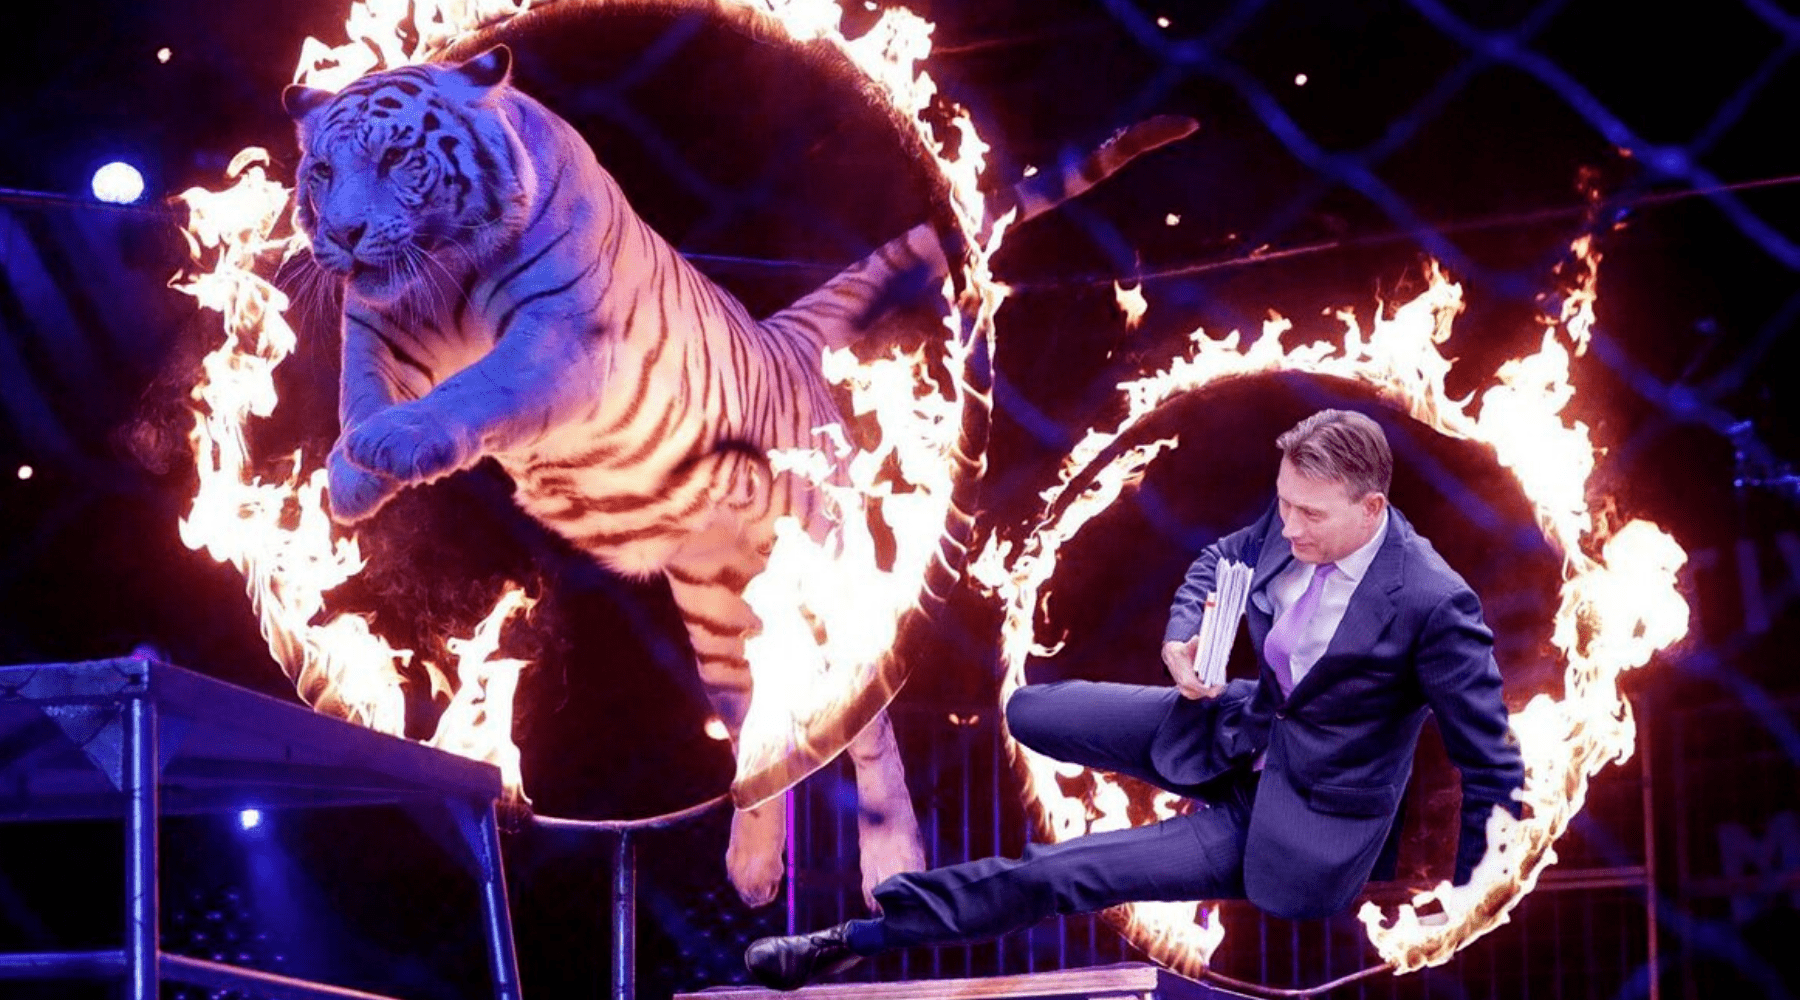 Tigre sautant à travers un cerceau de feu.